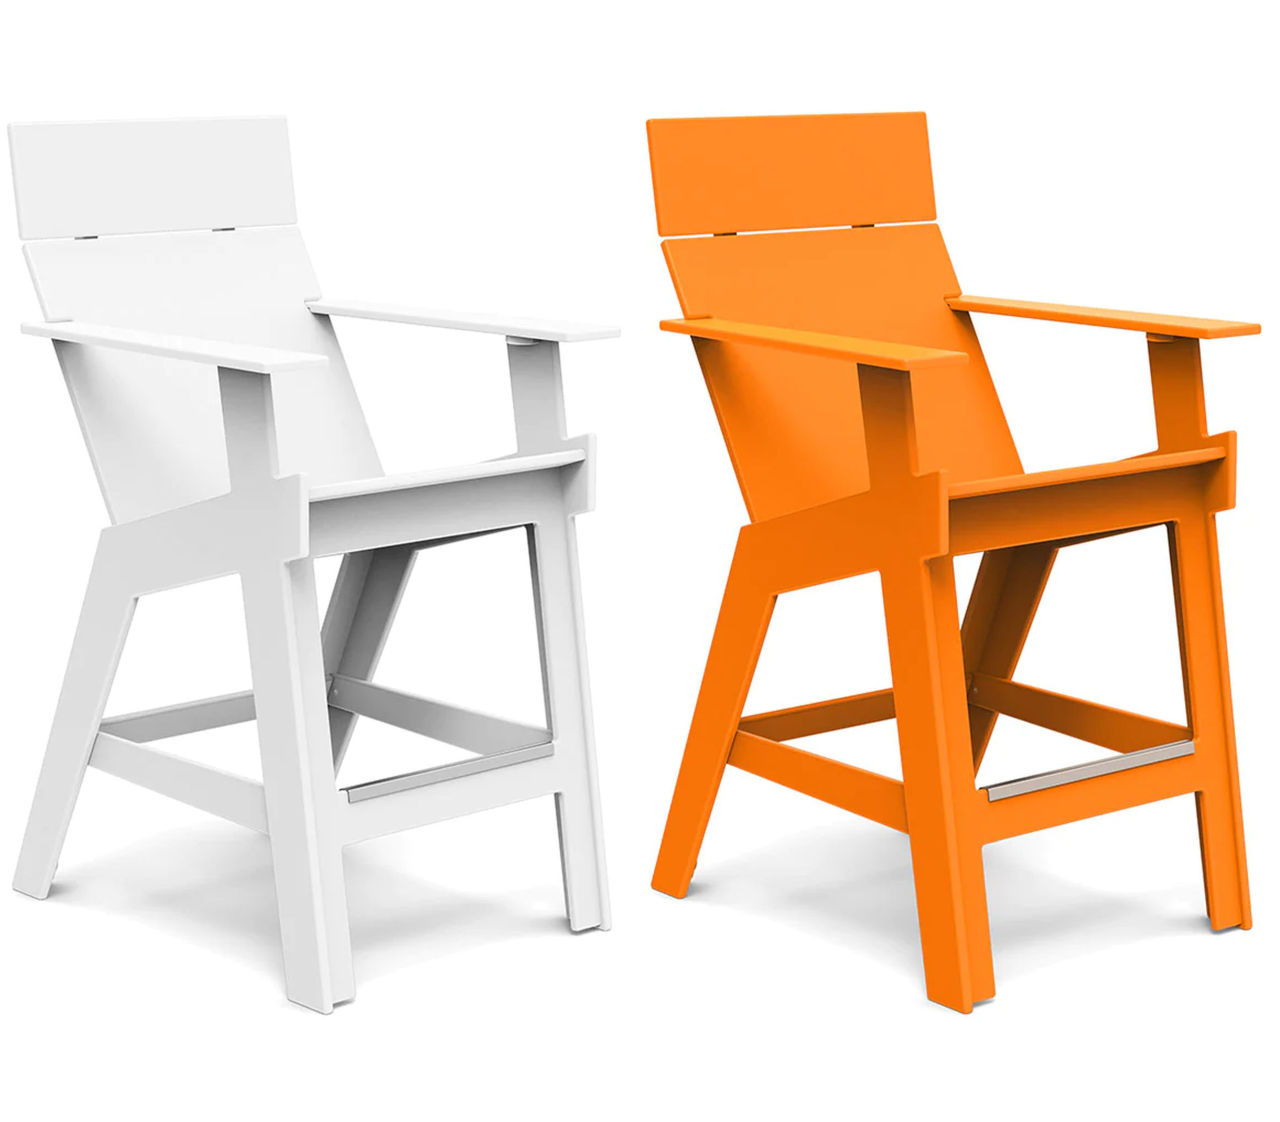 Lollygagger Hi-Rise Chair Modular Design-Color variant 4